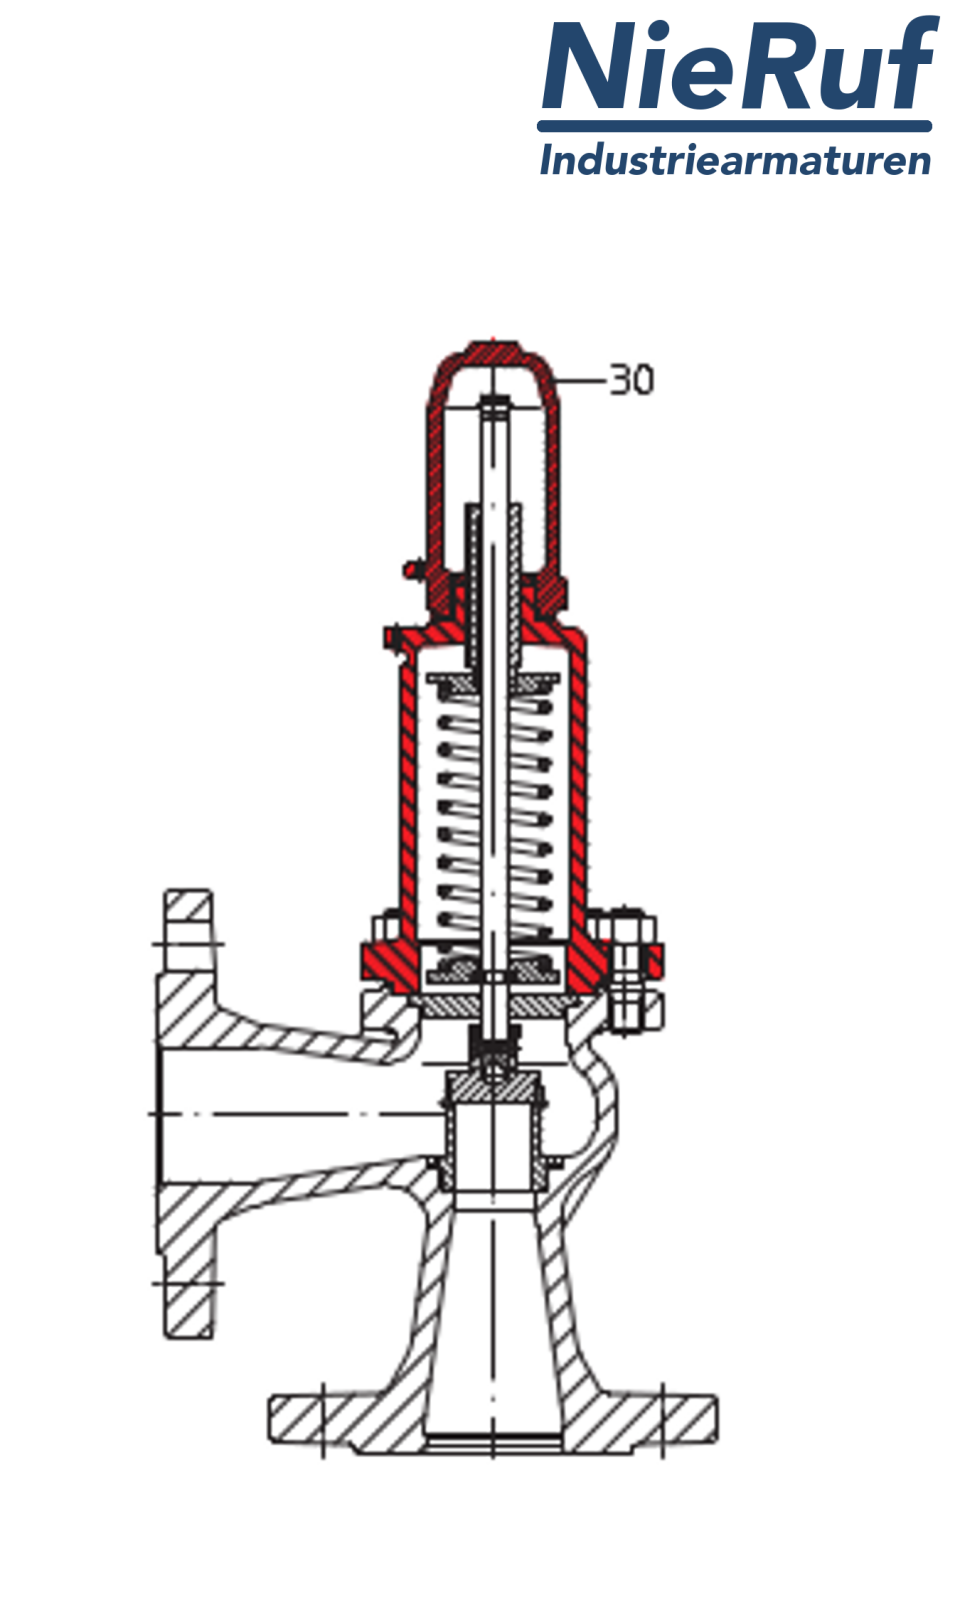 flange-safety valve DN80/DN80 SF0101, cast iron EN-JL1040 metal, without lever